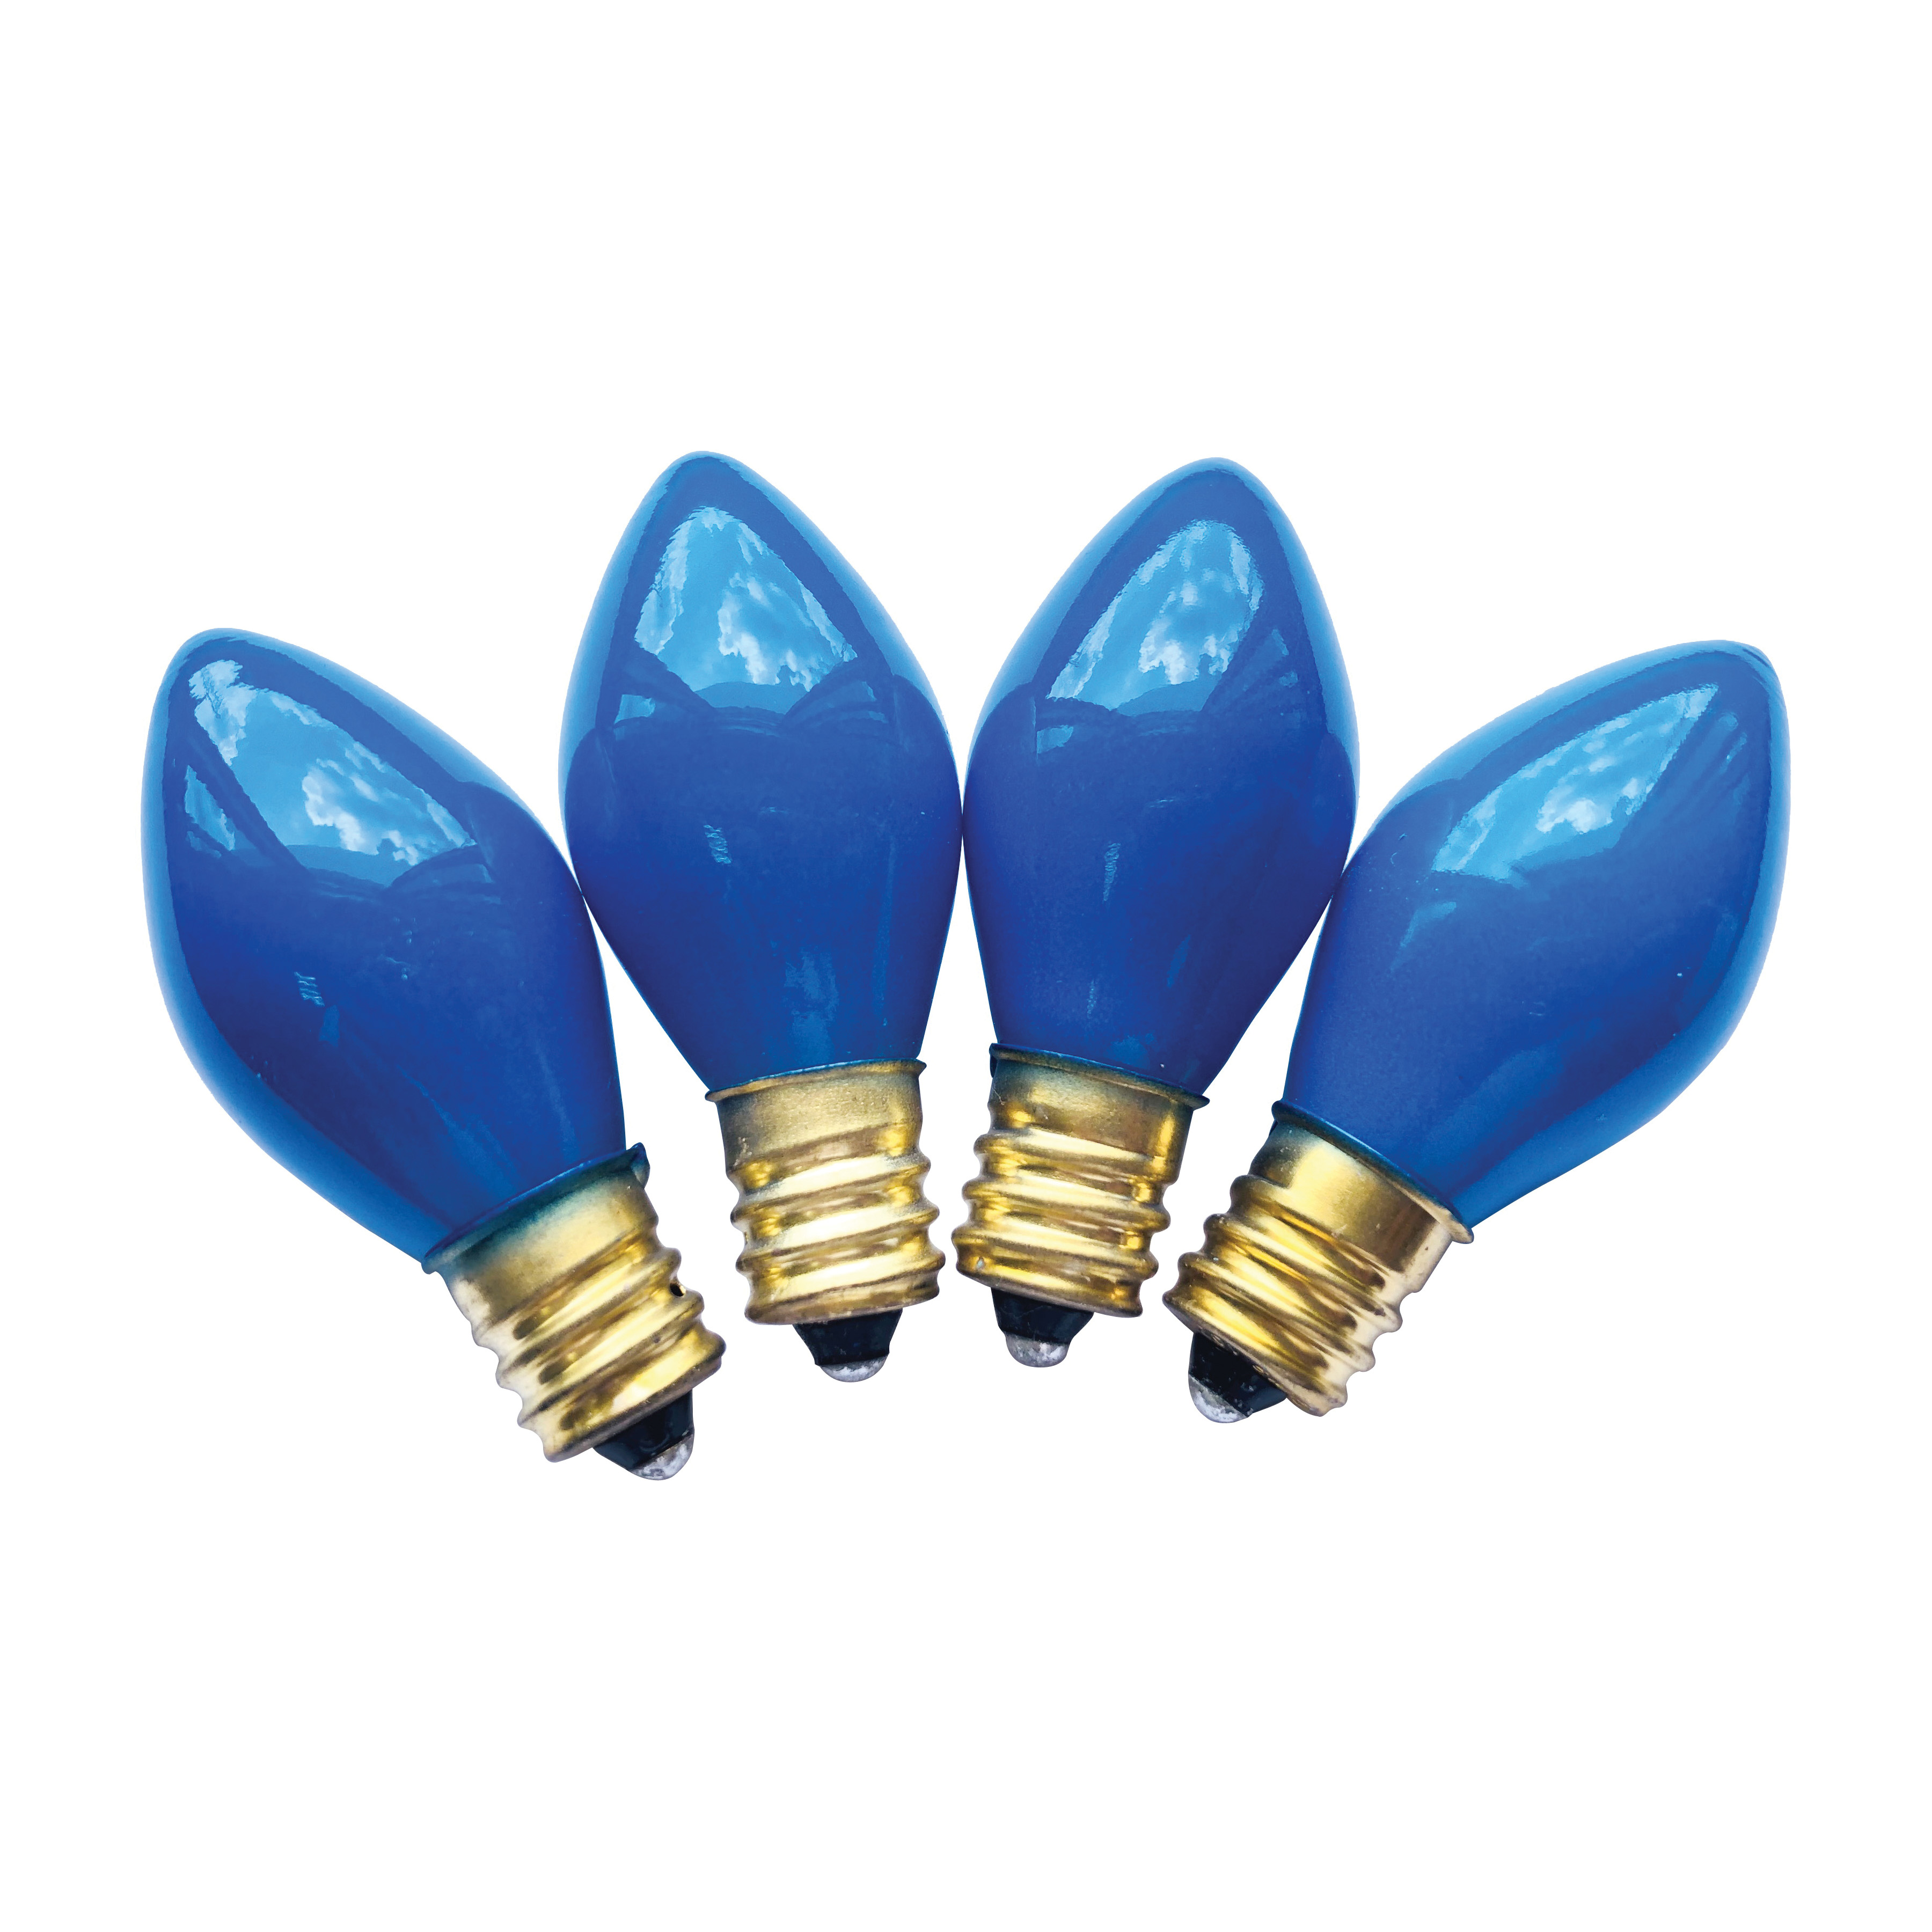 16294 Replacement Bulb, 5 W, Candelabra Lamp Base, Incandescent Lamp, Ceramic Blue Light